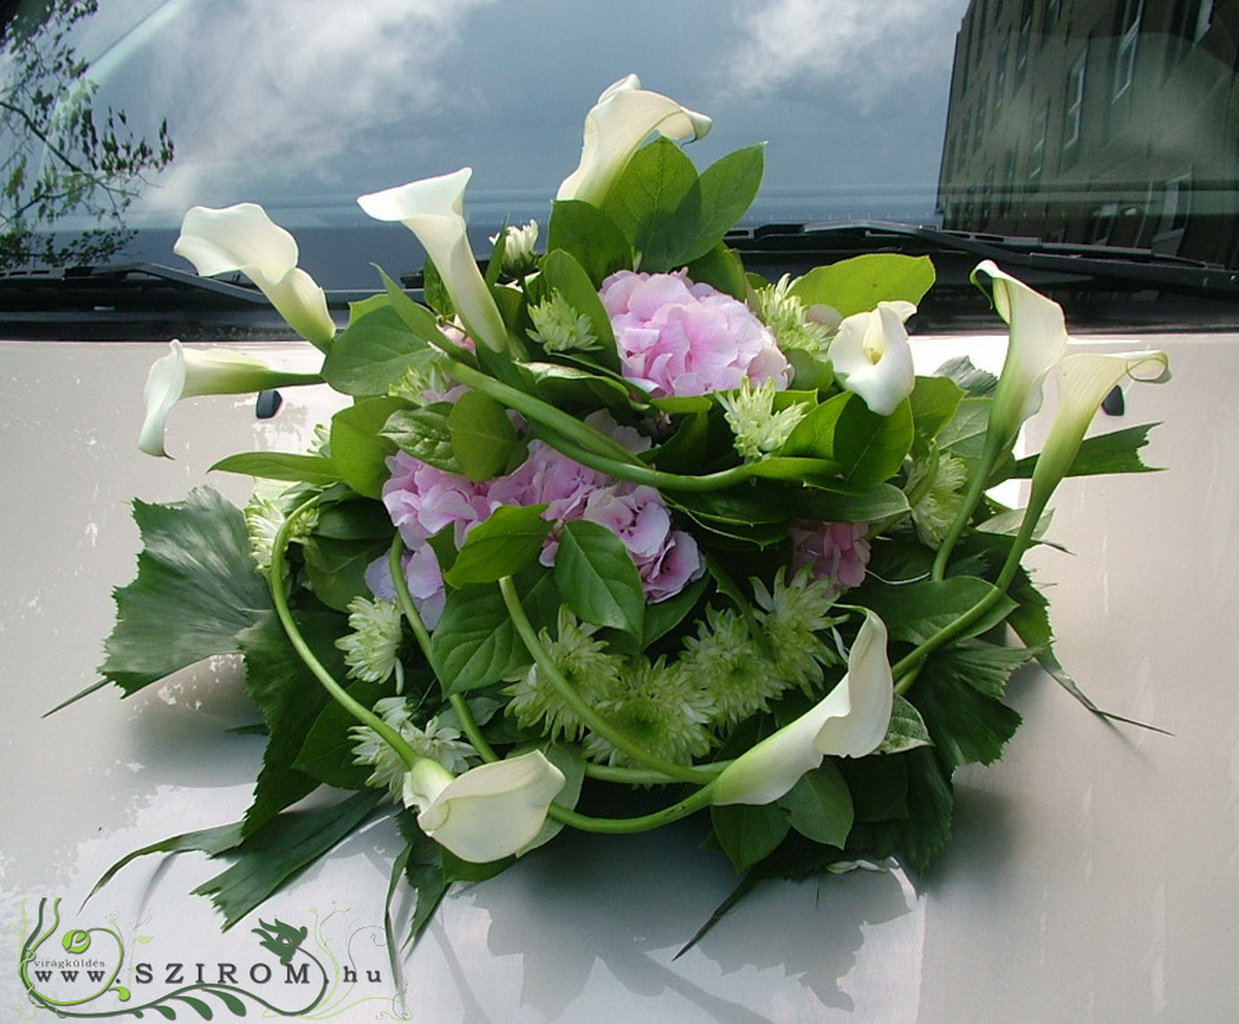 flower delivery Budapest - round car flower arrangement with hydrangeas and callas (pink, white, green, chrysanthemum)